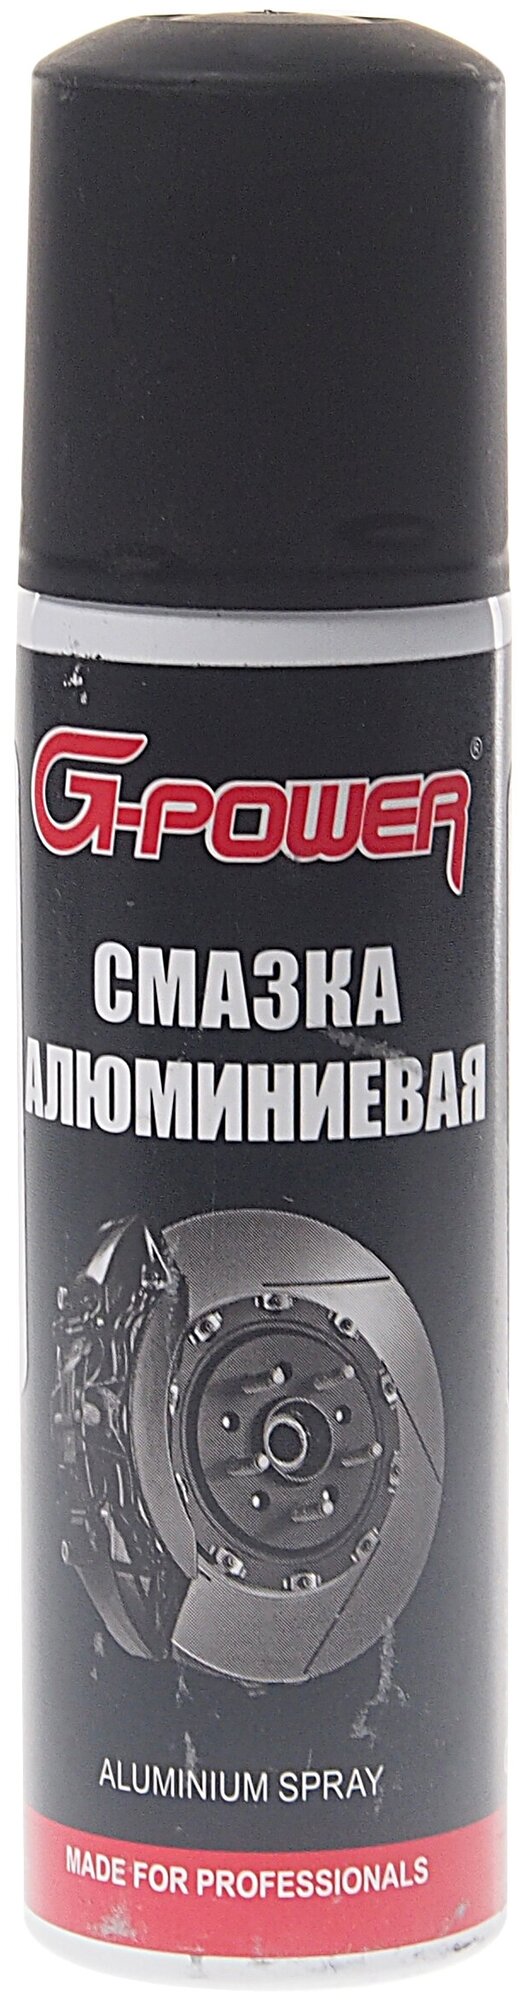 Смазка алюминиевая (аэрозоль) 90мл G-POWER /1/25 NEW